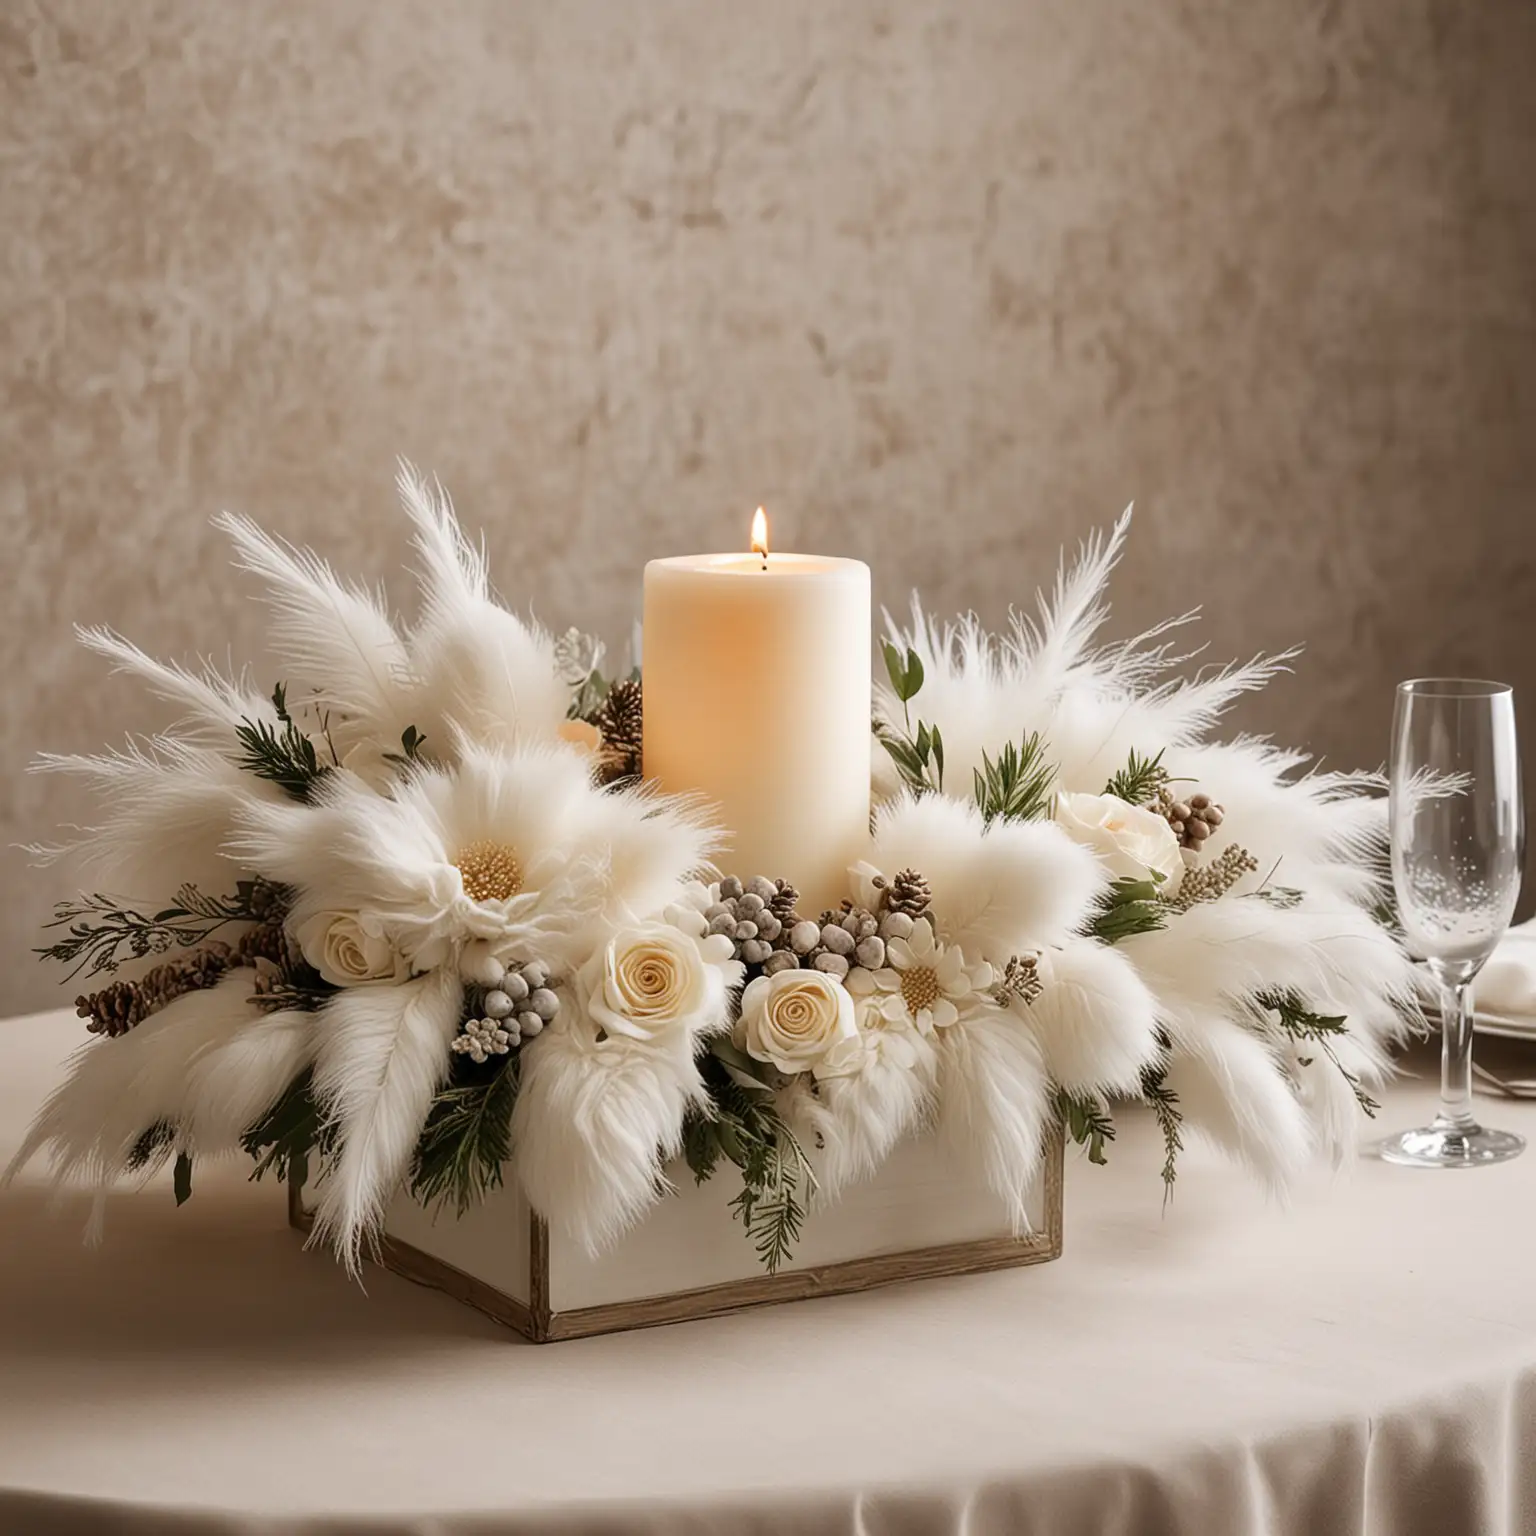 elegant winter wedding centerpiece with faux white fur; keep background neutral